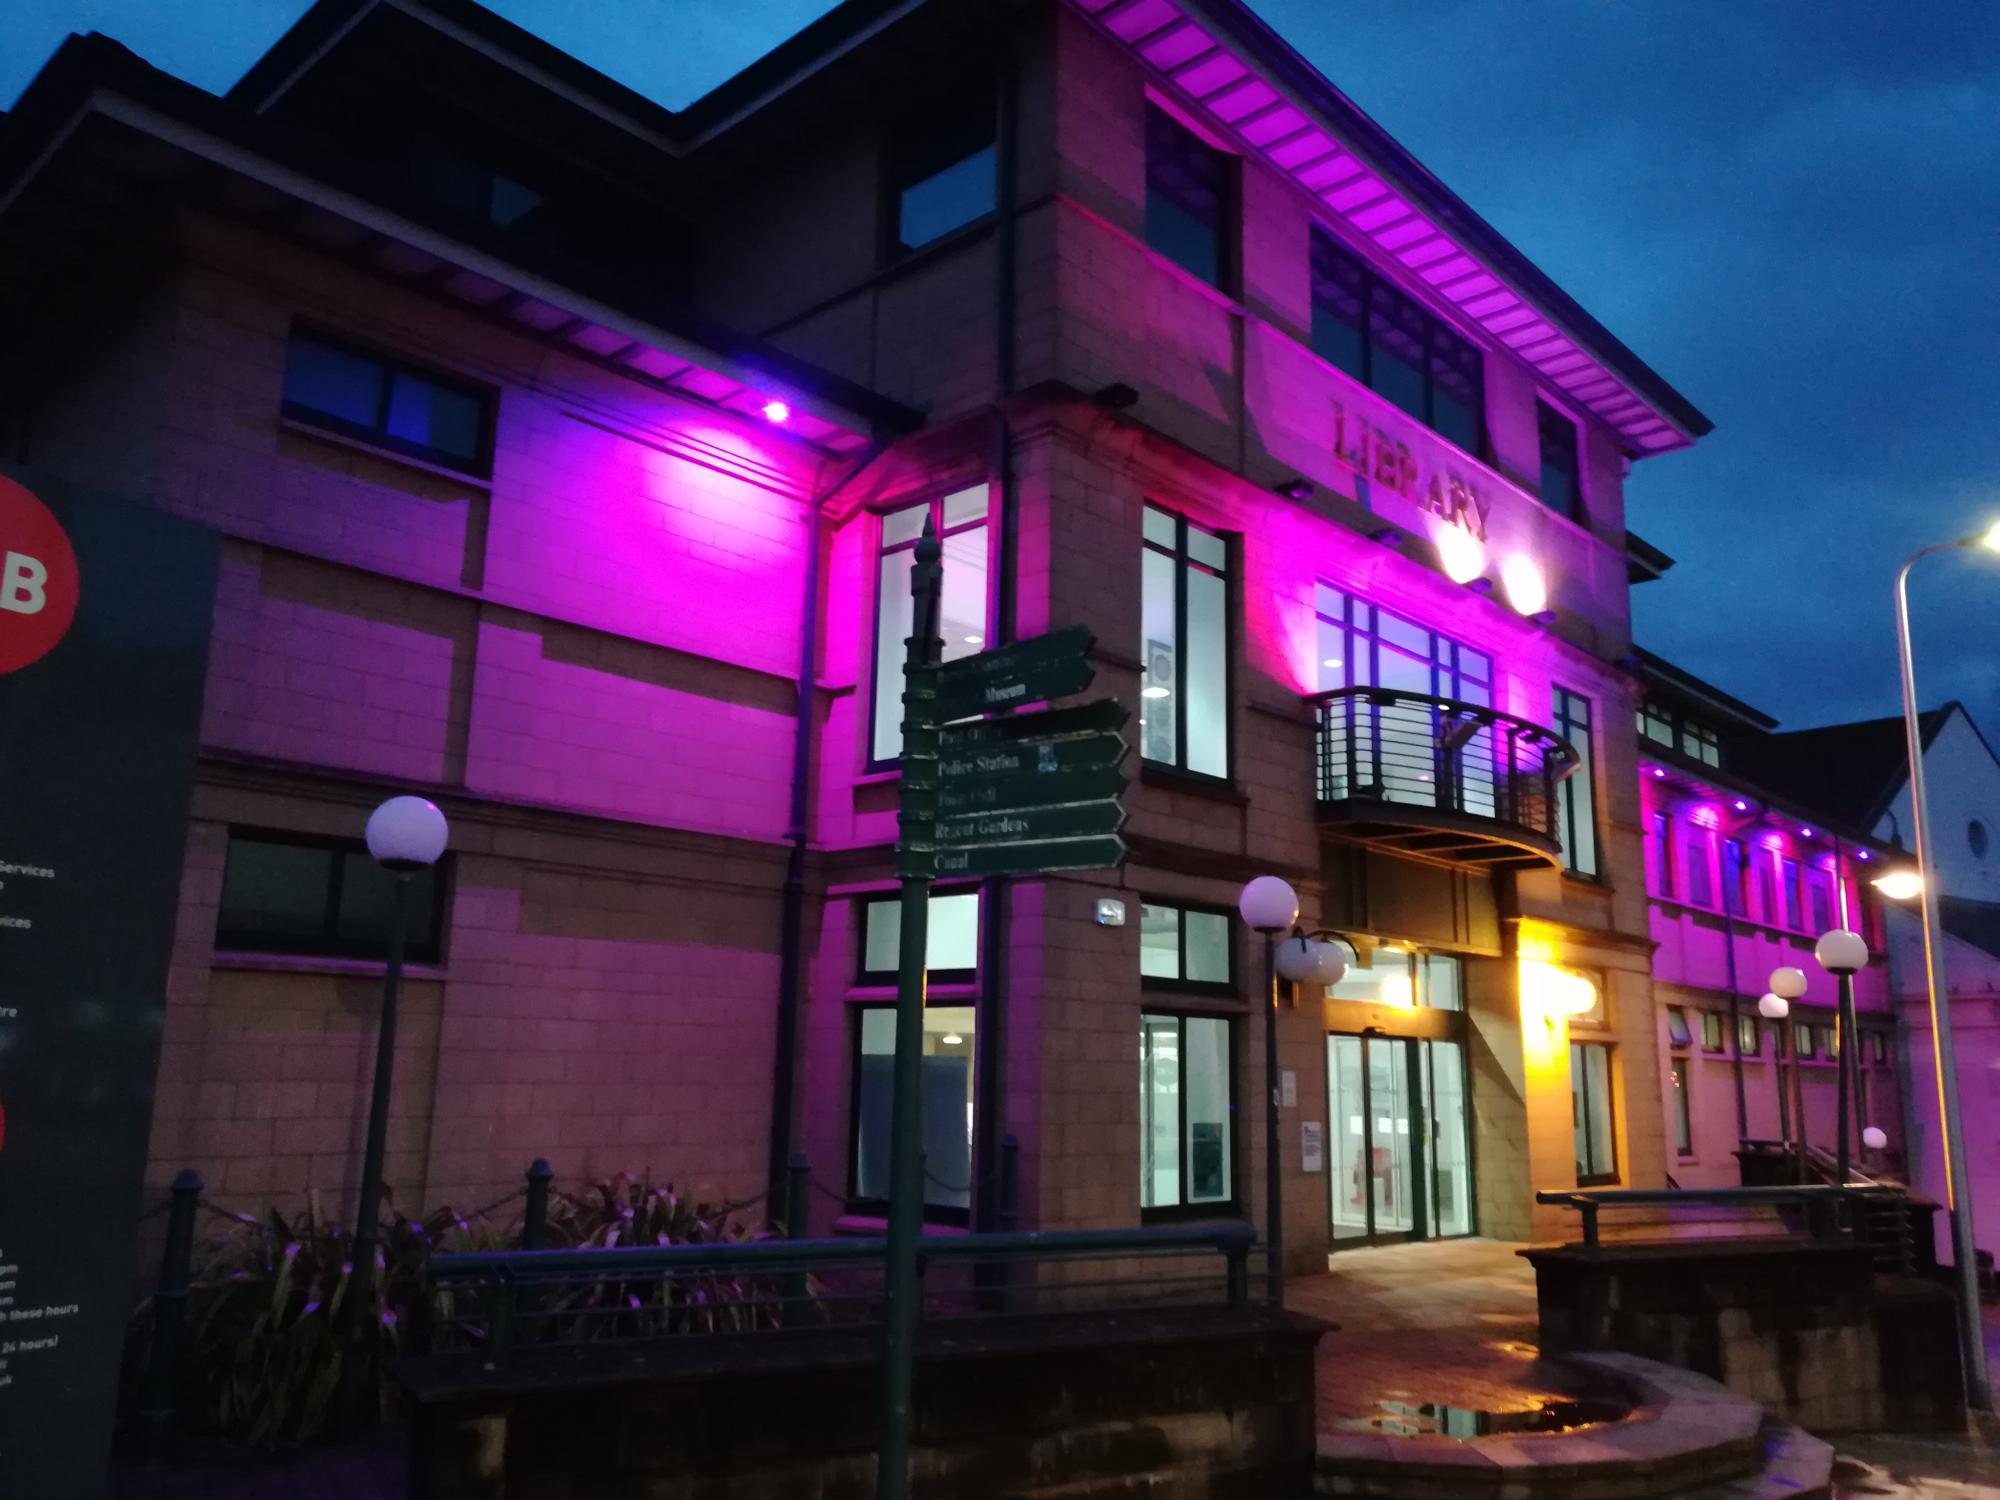 William Patrick Library lit up purple